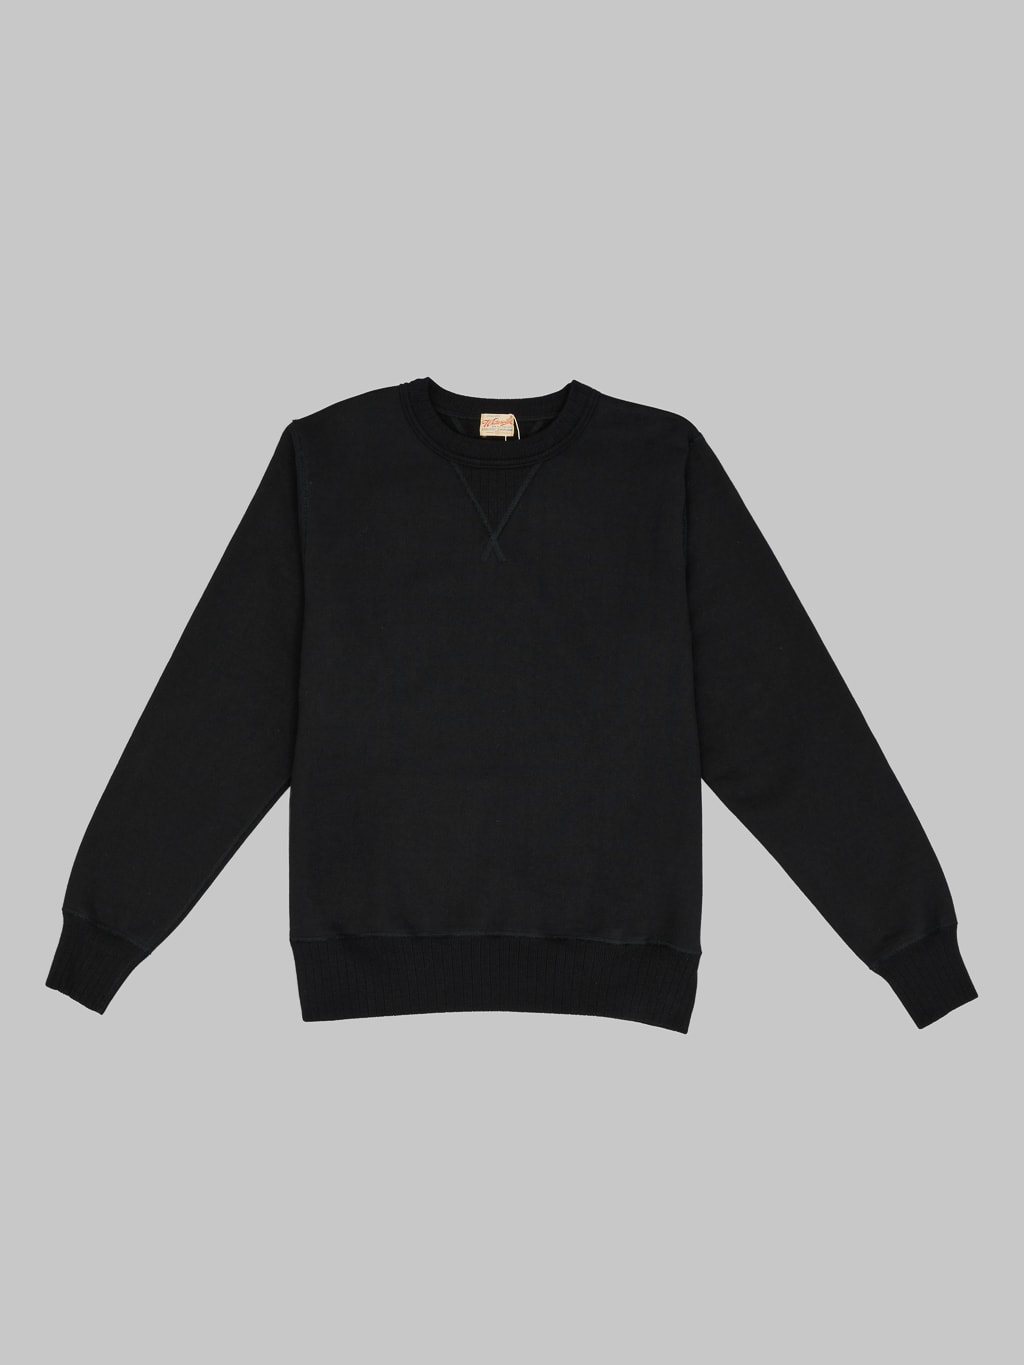 Whitesville cotton Loopwheel Sweatshirt Black front